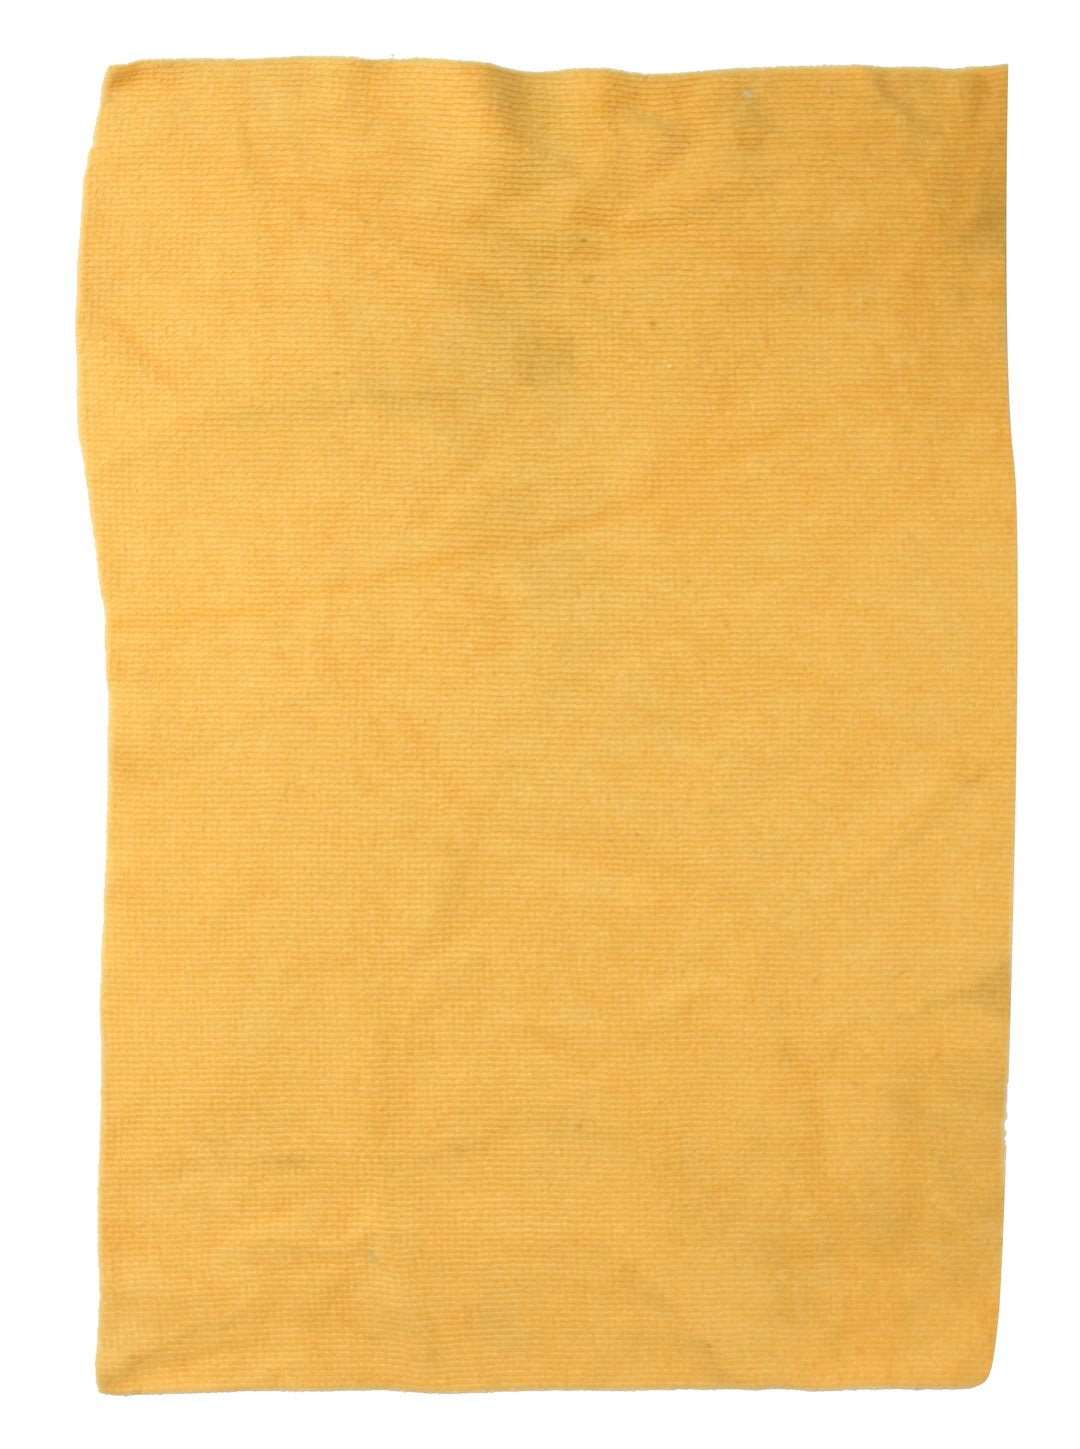 Eurow All-Purpose Microfiber Bag of Rags – 1 Pound